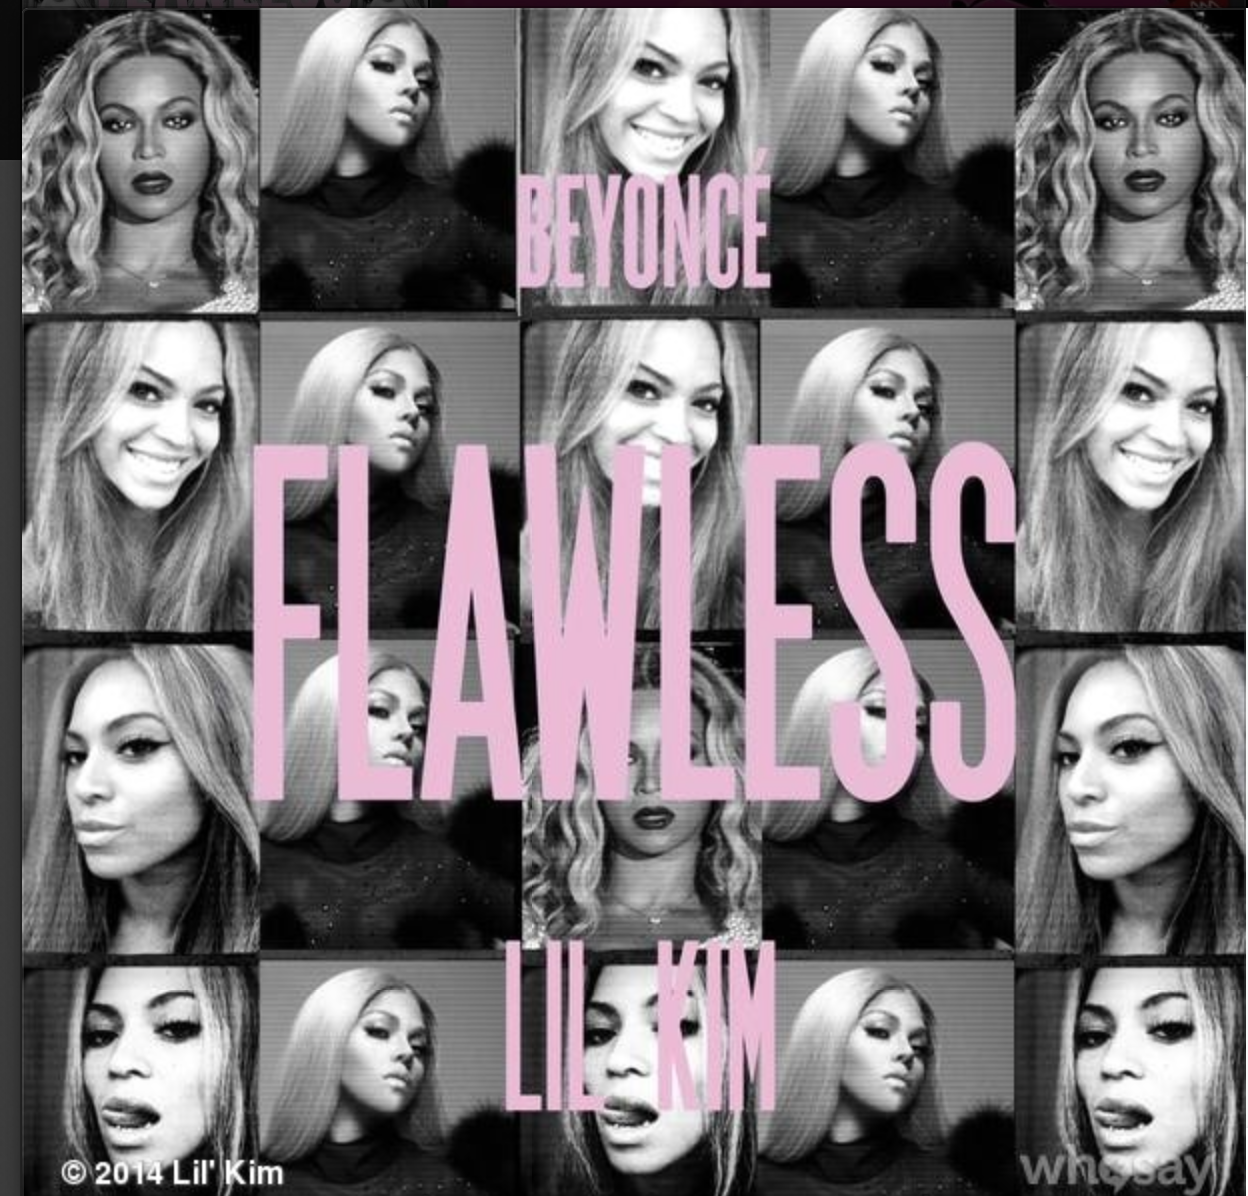 Listen To Lil Kim’s “Flawless” Remix